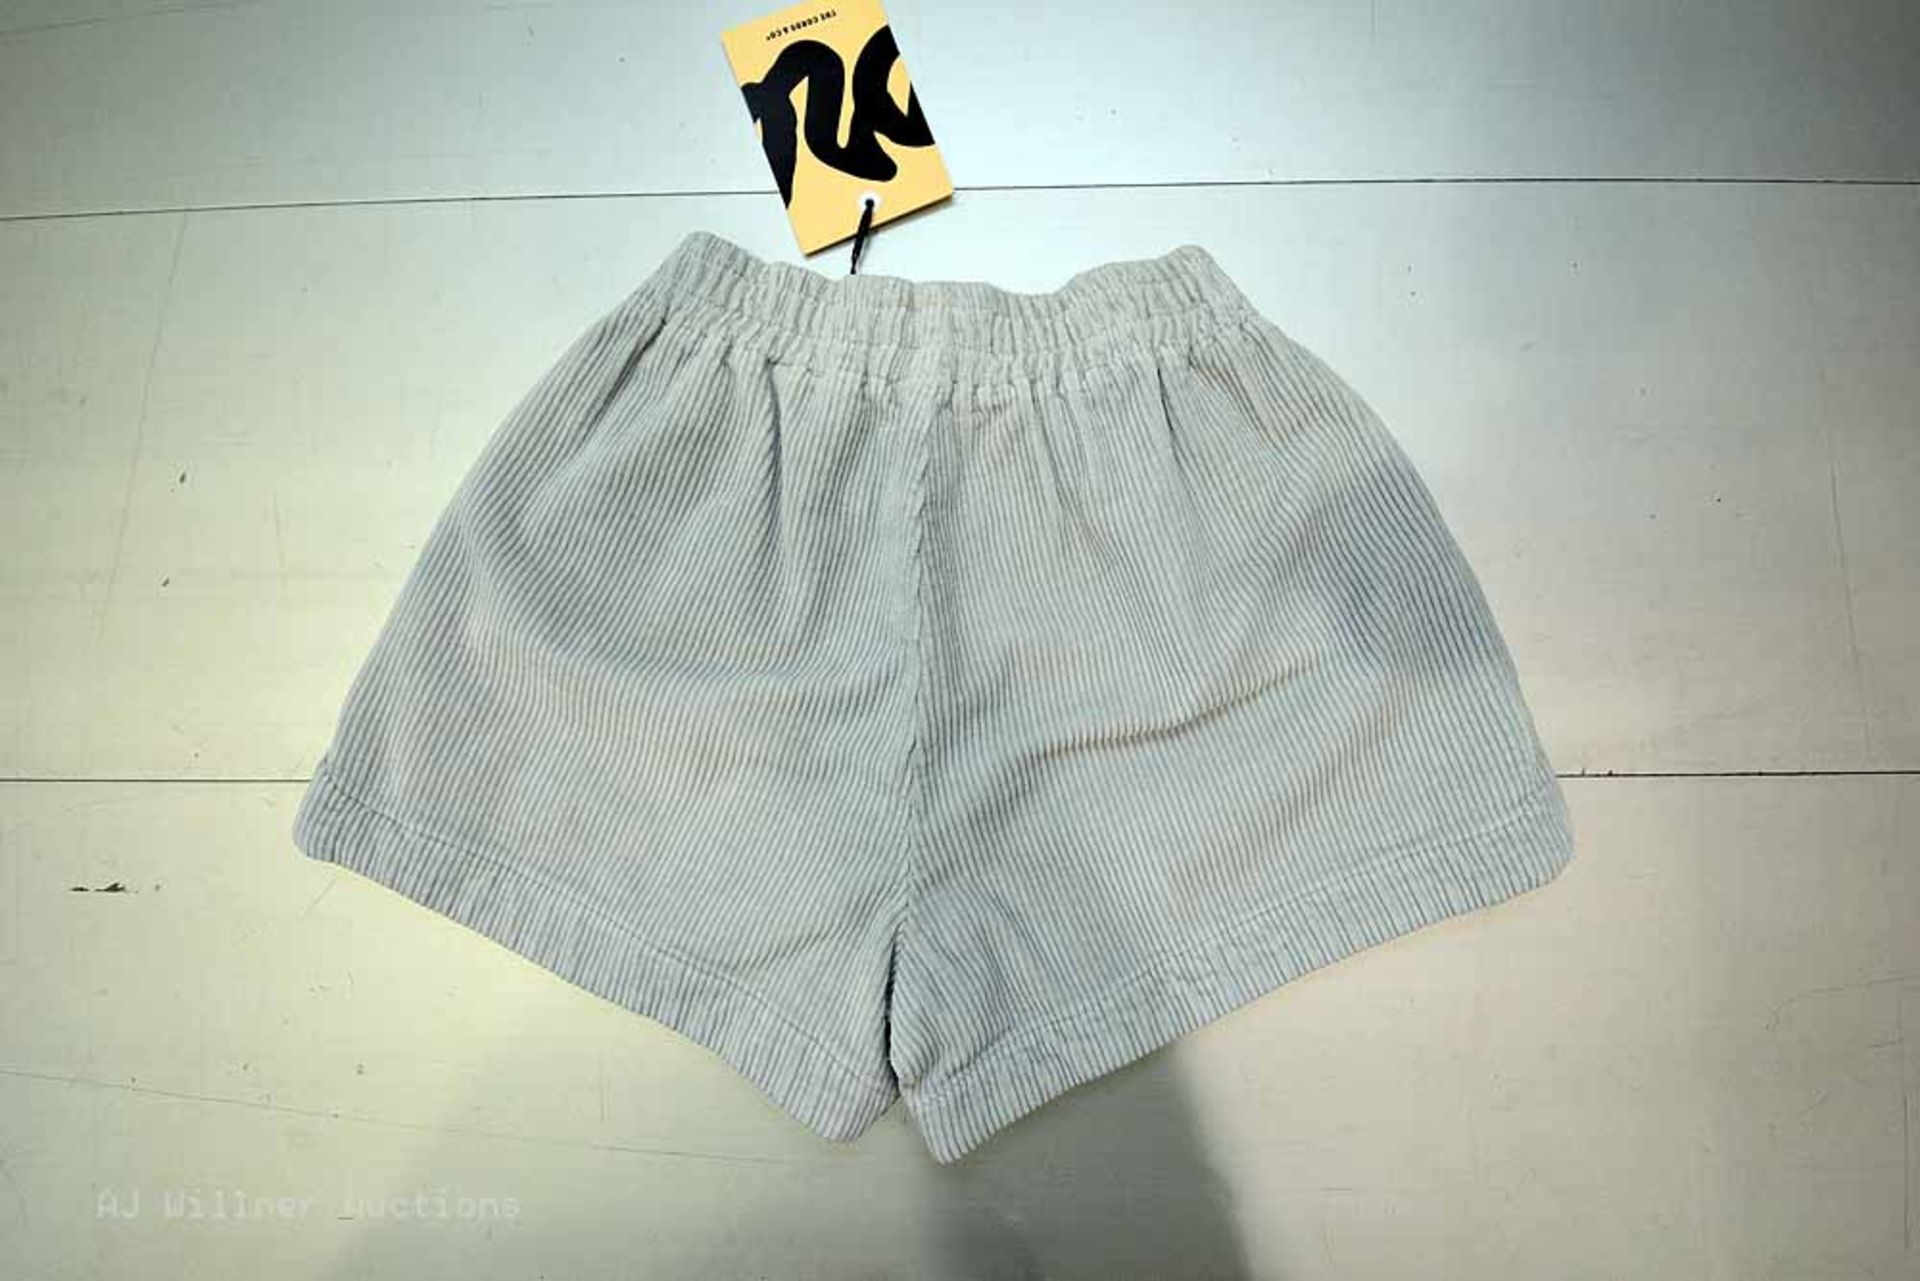 The Cords & Co. "Ella" Style, Women's Shorts (Silver) X-S, L, *(Blush)* X-S, S, M, L - Image 5 of 9